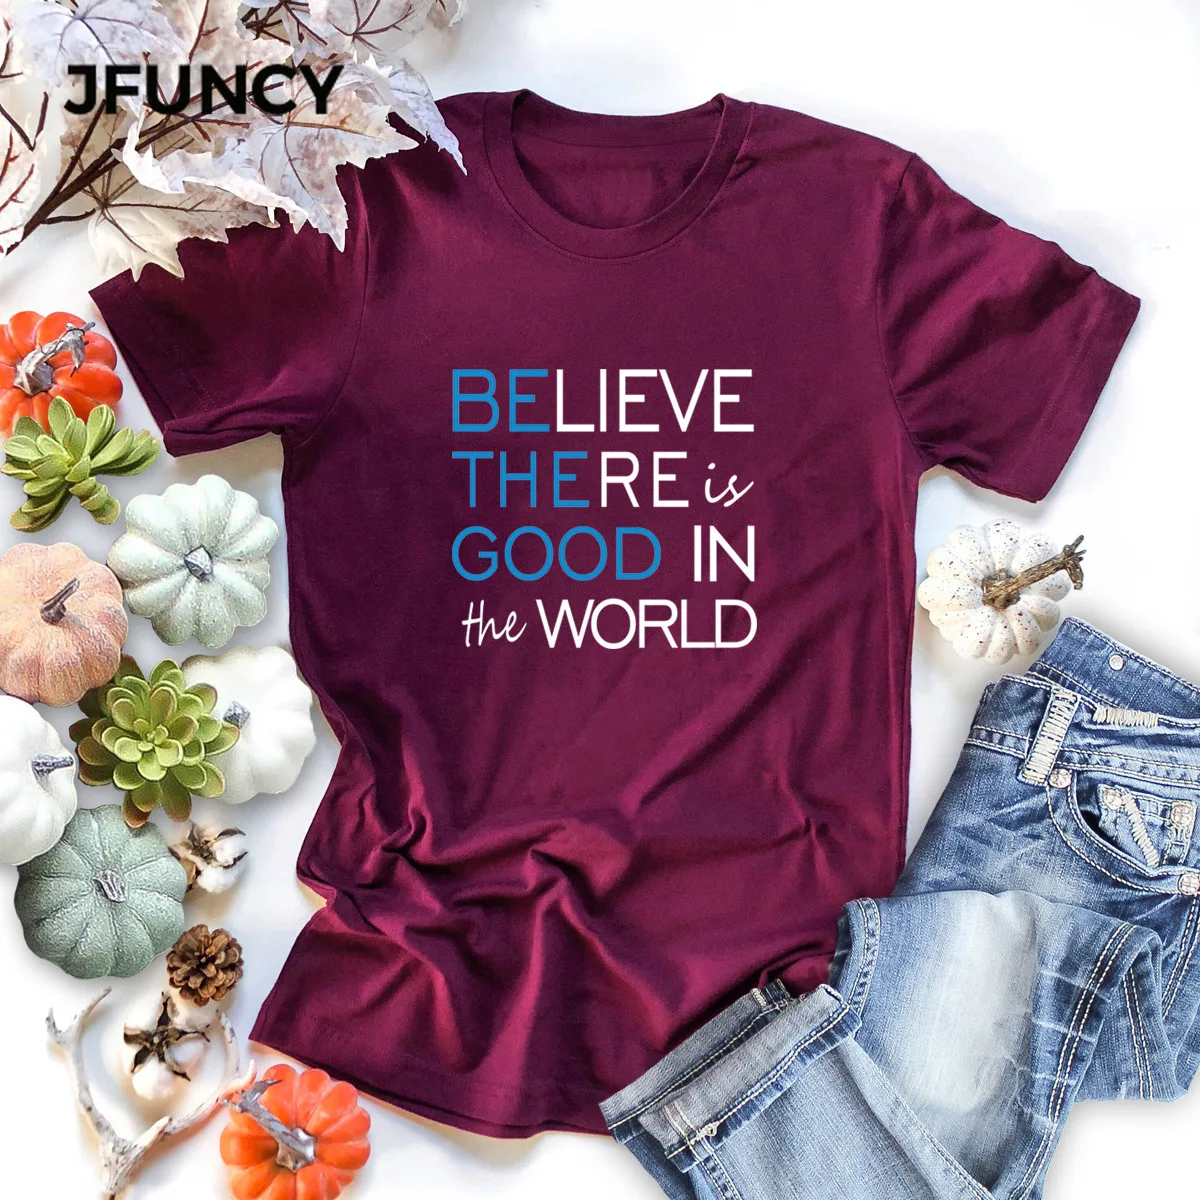 JFUNCY New 100% Cotton Women T-Shirts  Short Sleeve Graphic Mujer Tees Female Tops Summer Casual Tshirt Woman Shirts